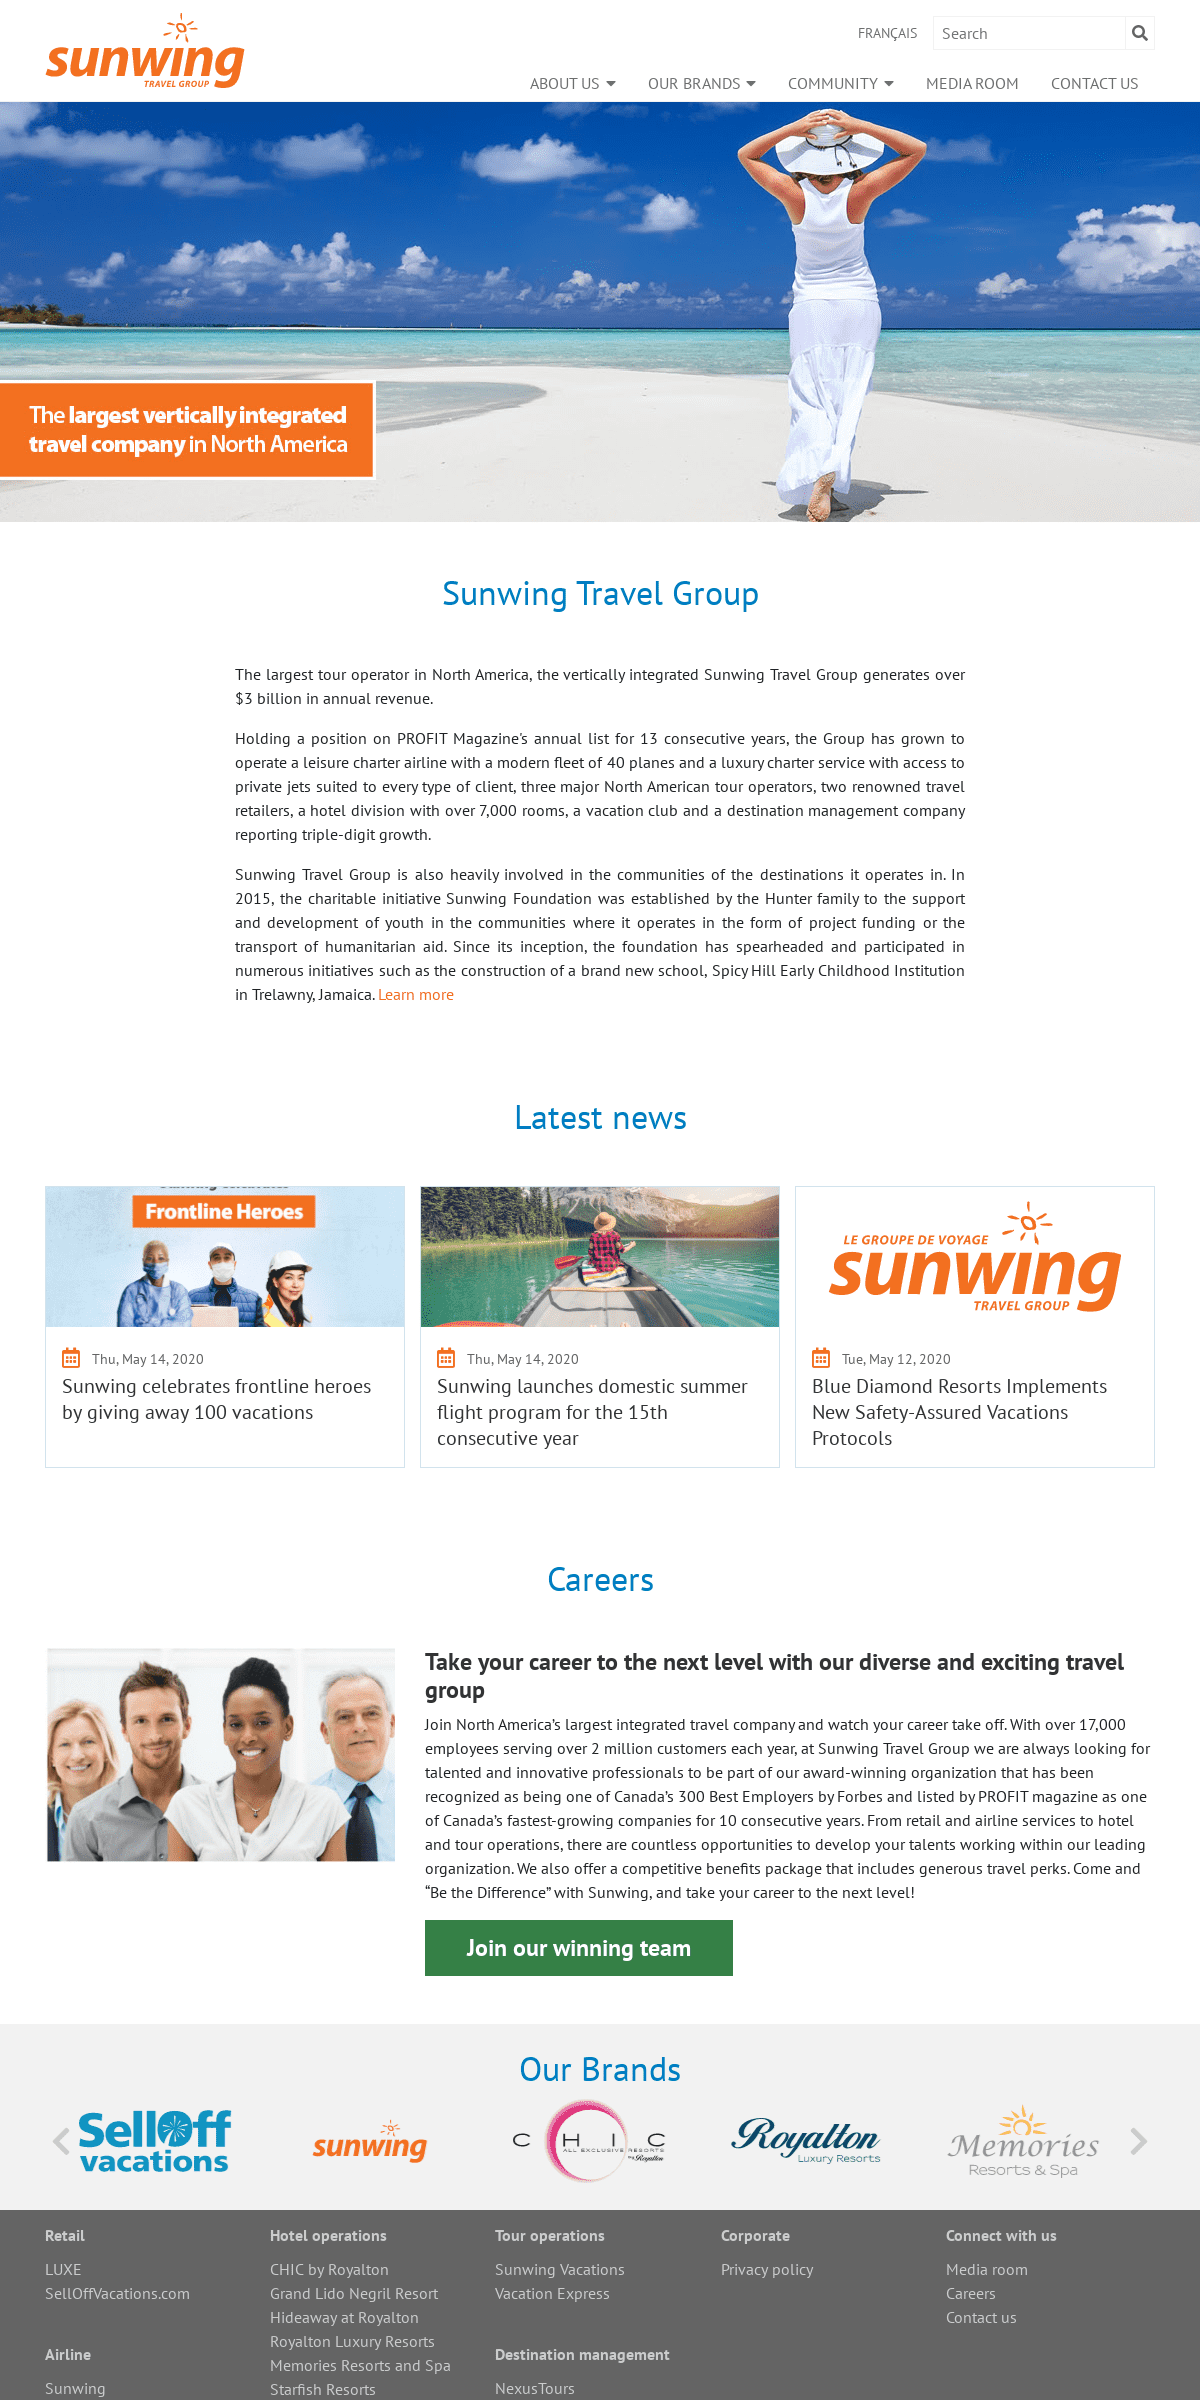 A complete backup of sunwingtravelgroup.com